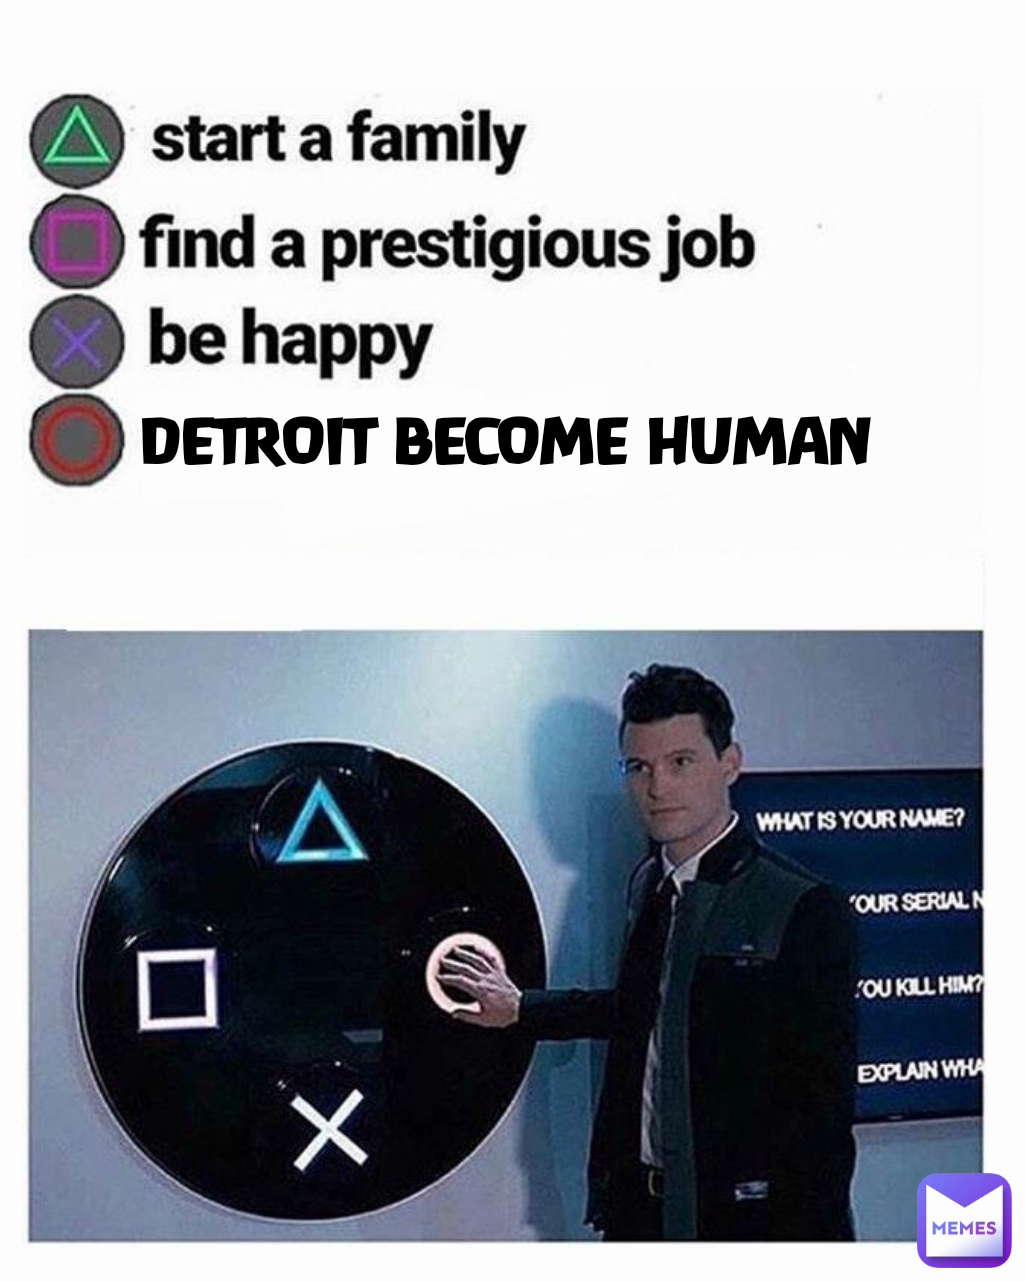 DETROIT BECOME HUMAN